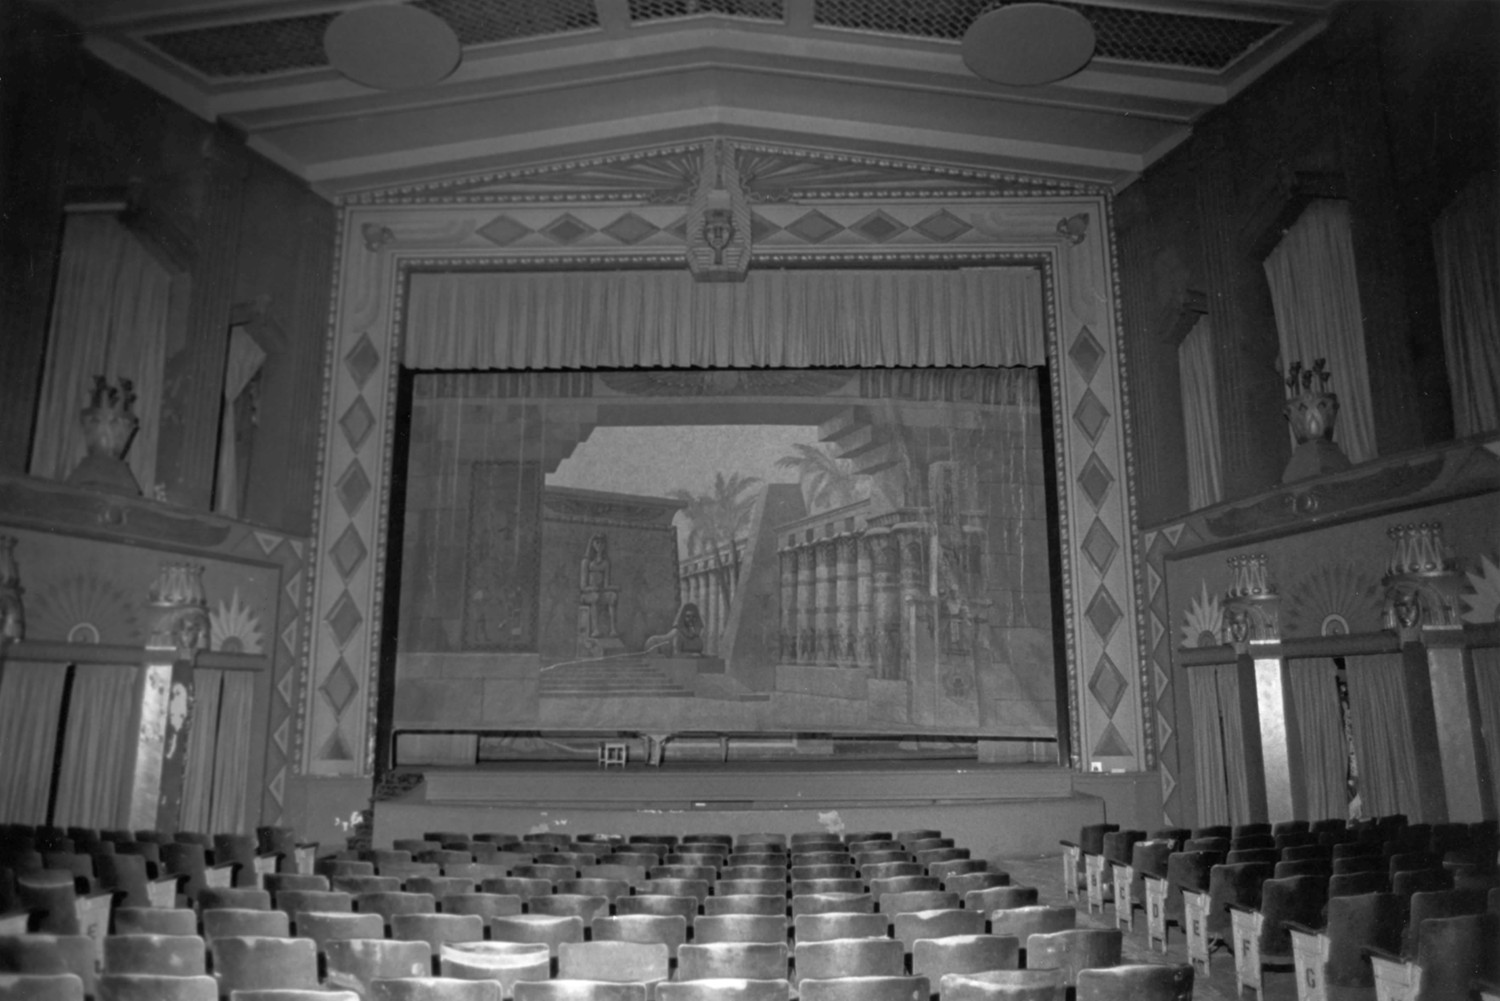 Egyptian Theatre, DeKalb Illinois Proscenium arch with original paint. Original fire curtain (1978)